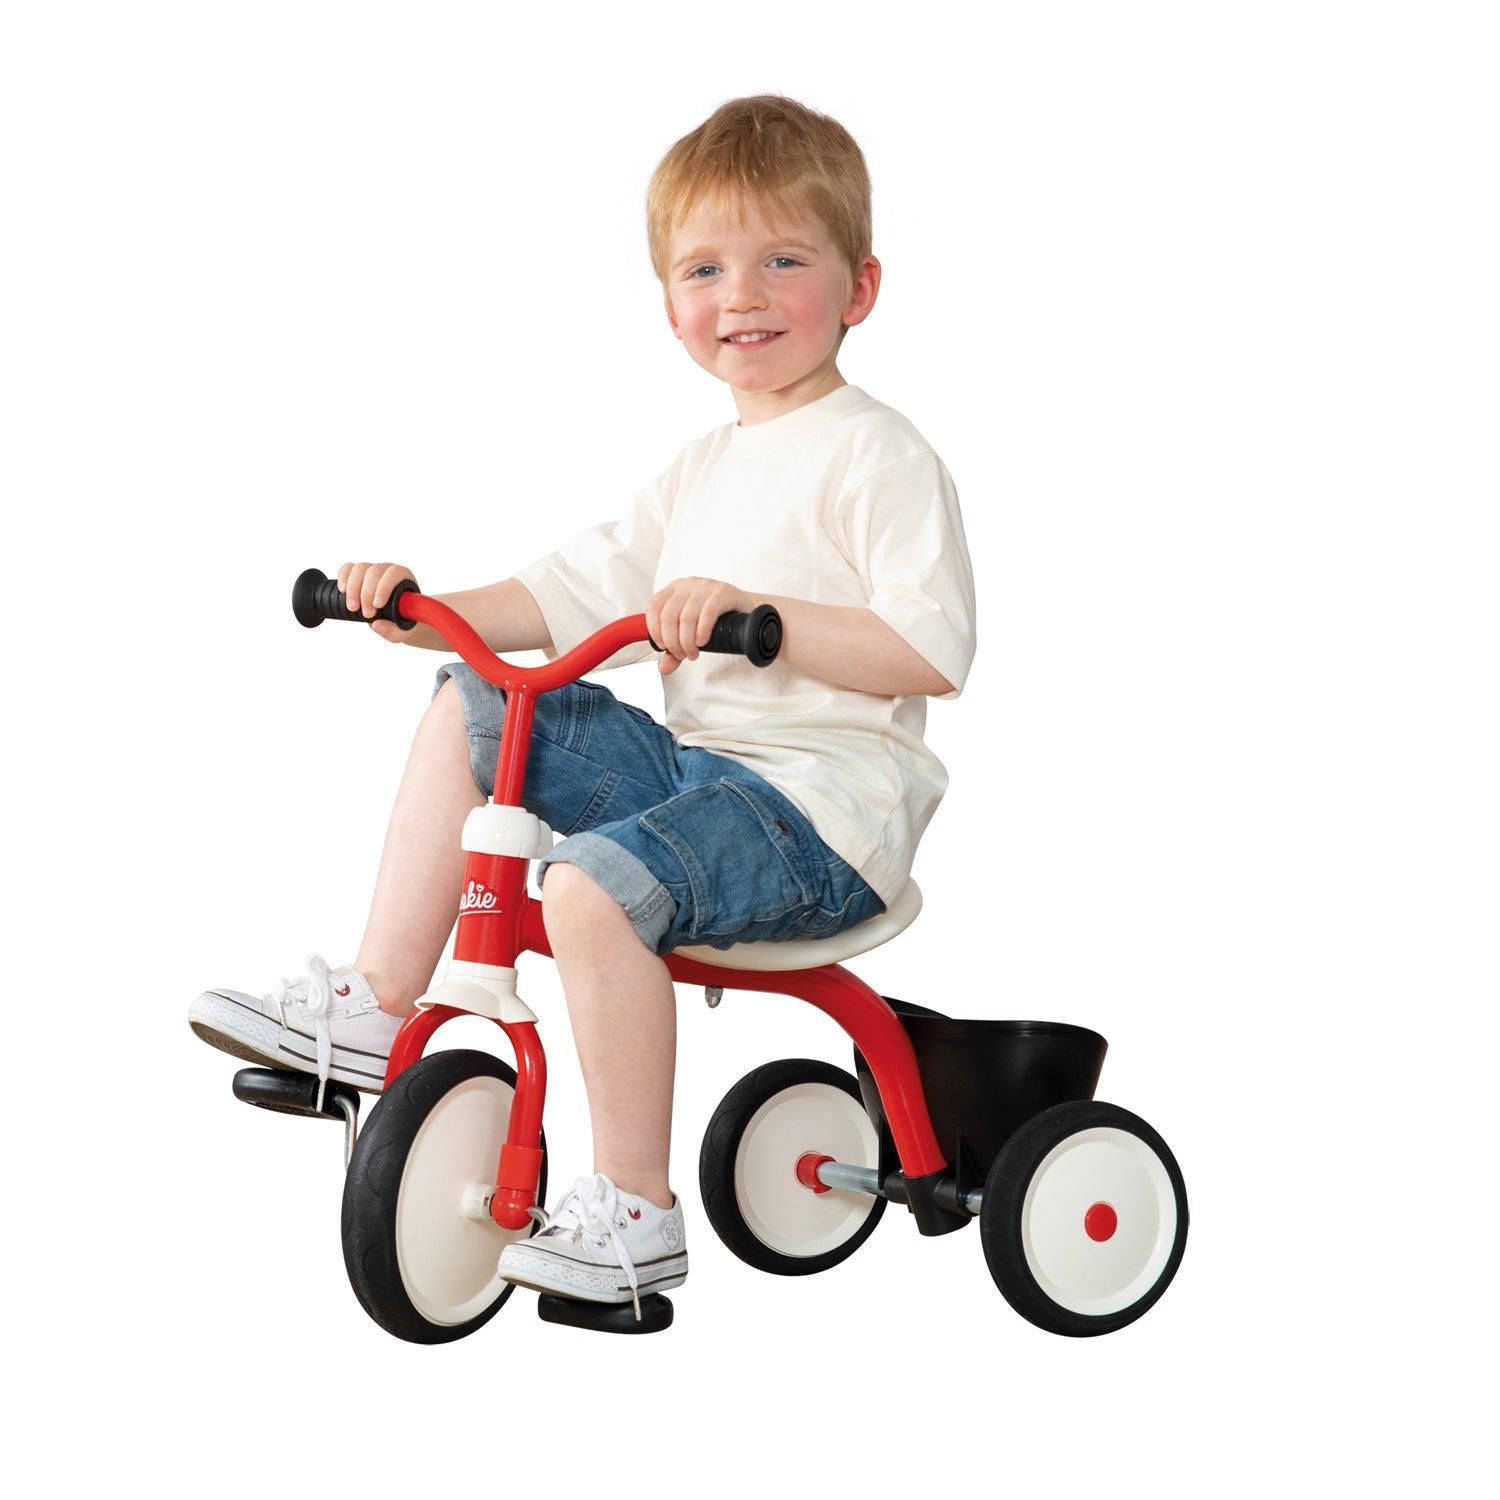 Smoby Rookie Trike Tricycle – TOYBOX